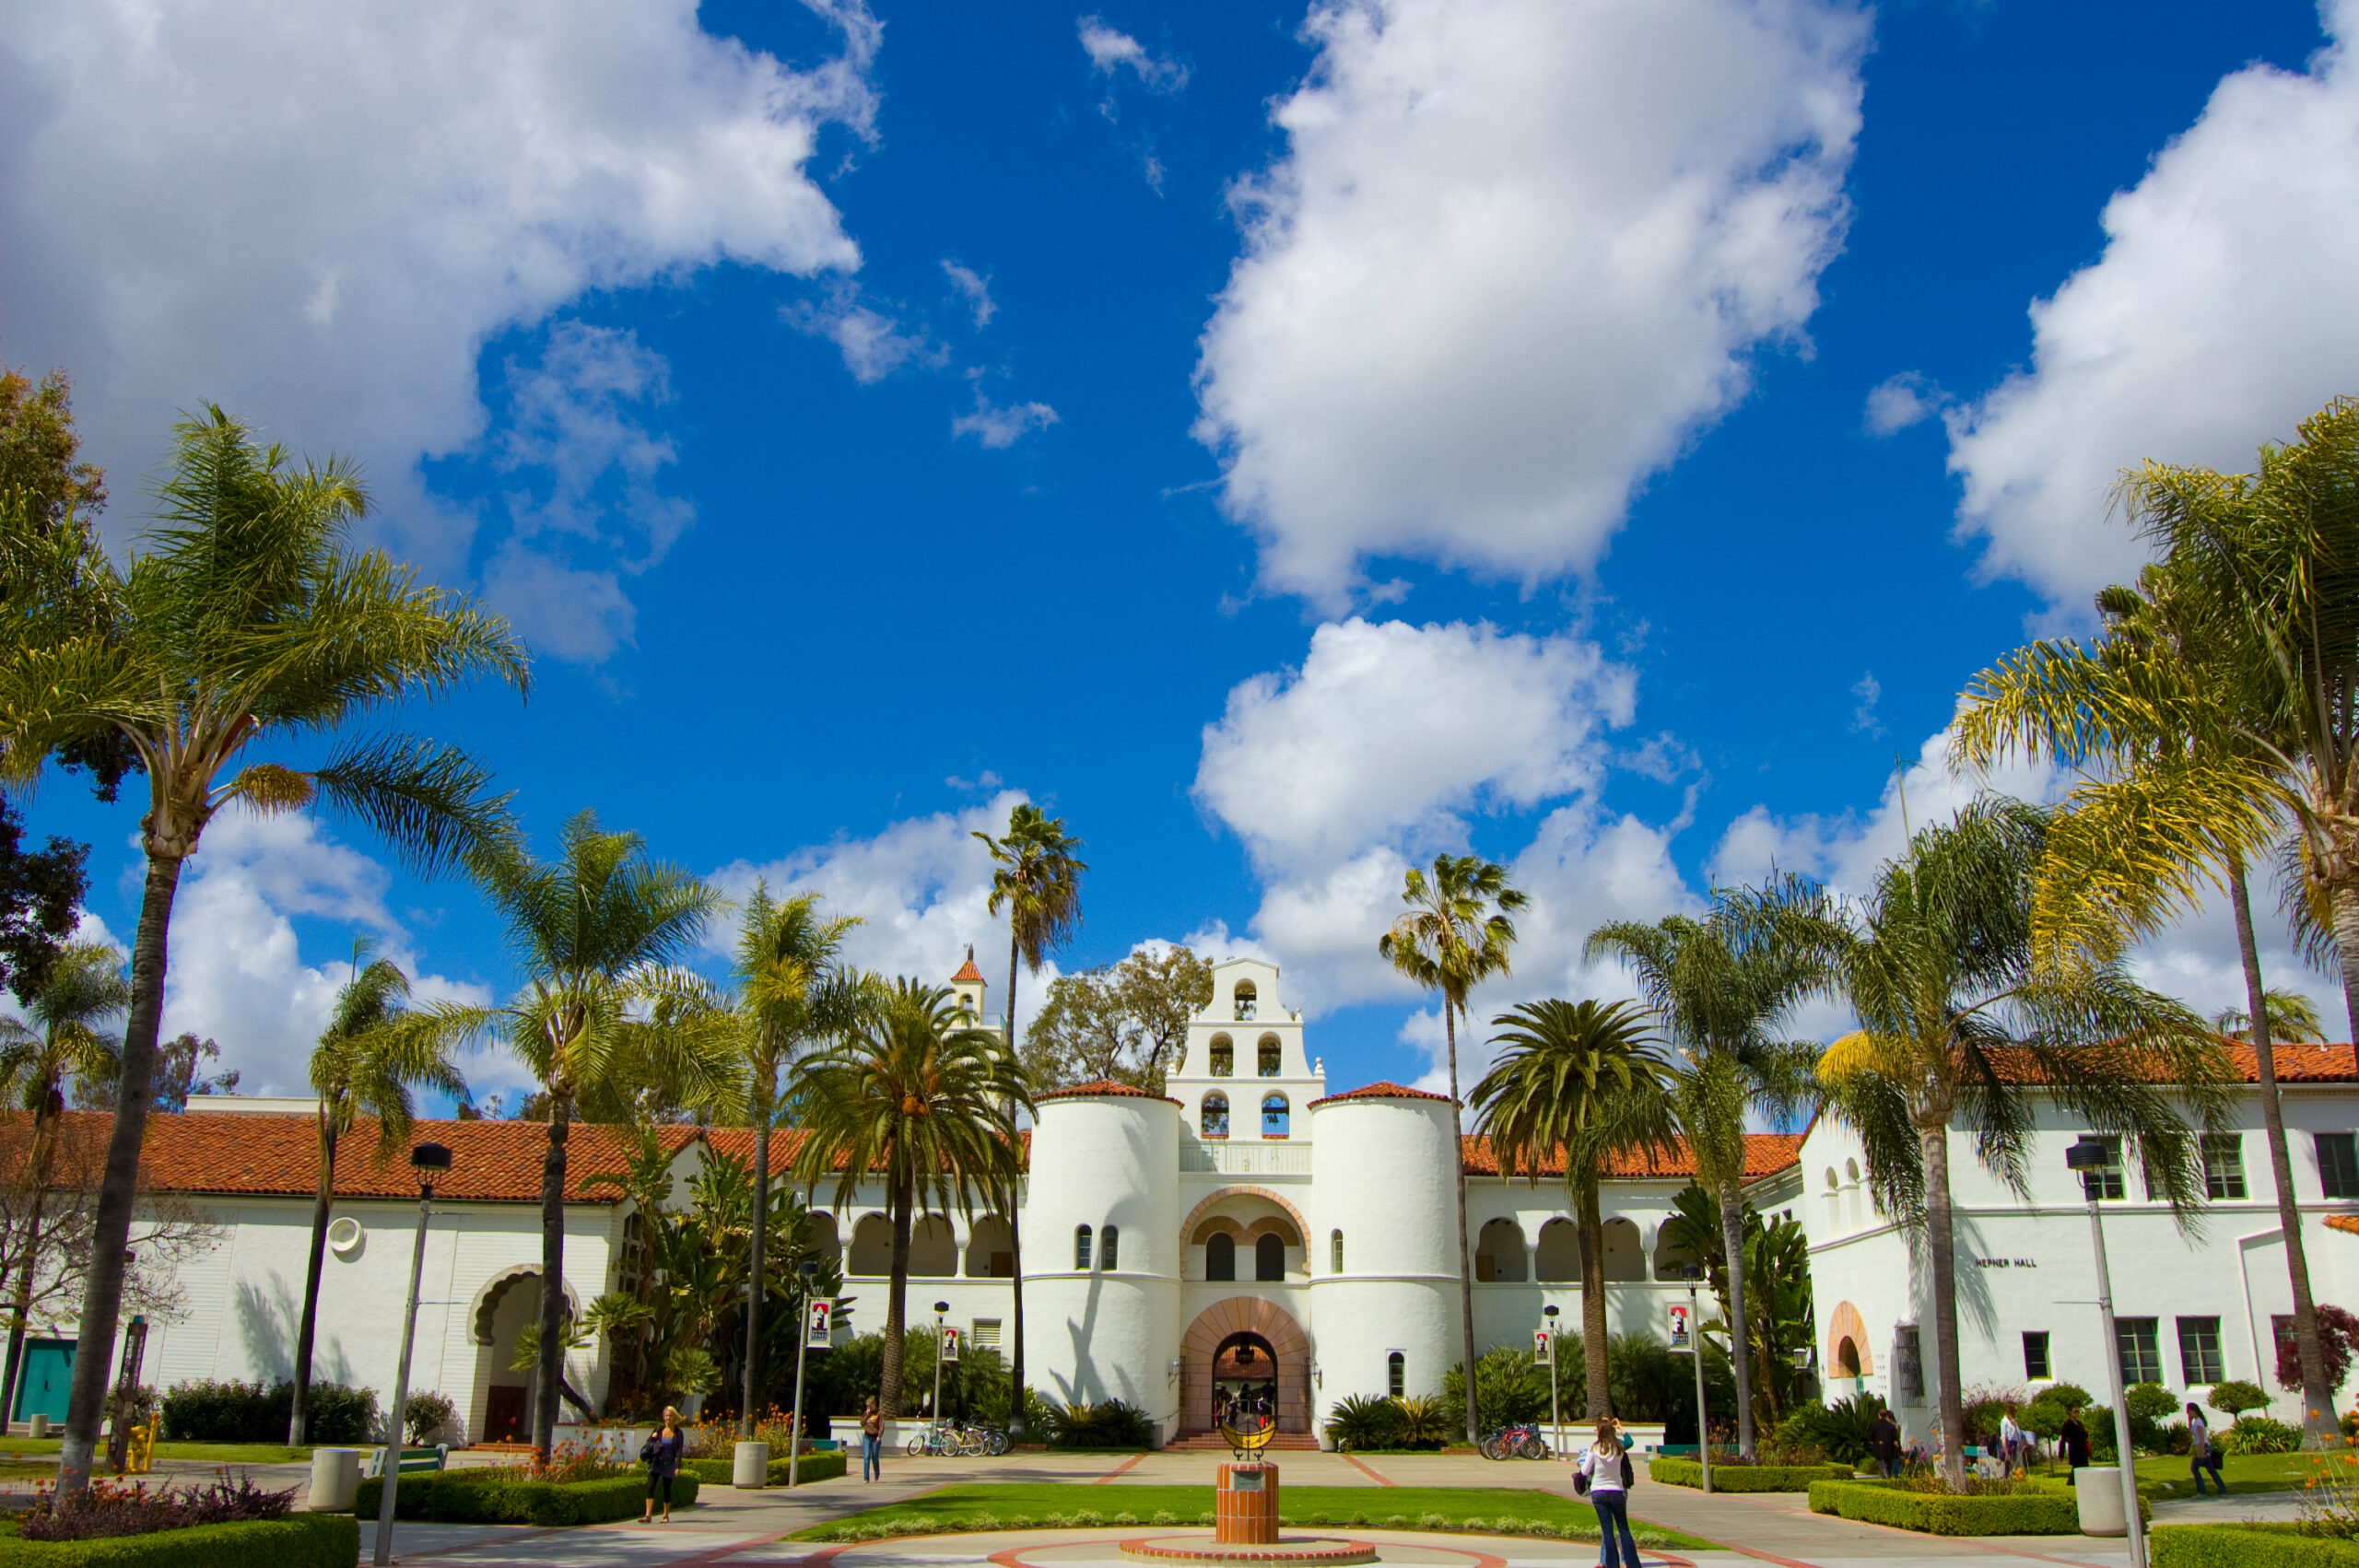 San Diego State University campus